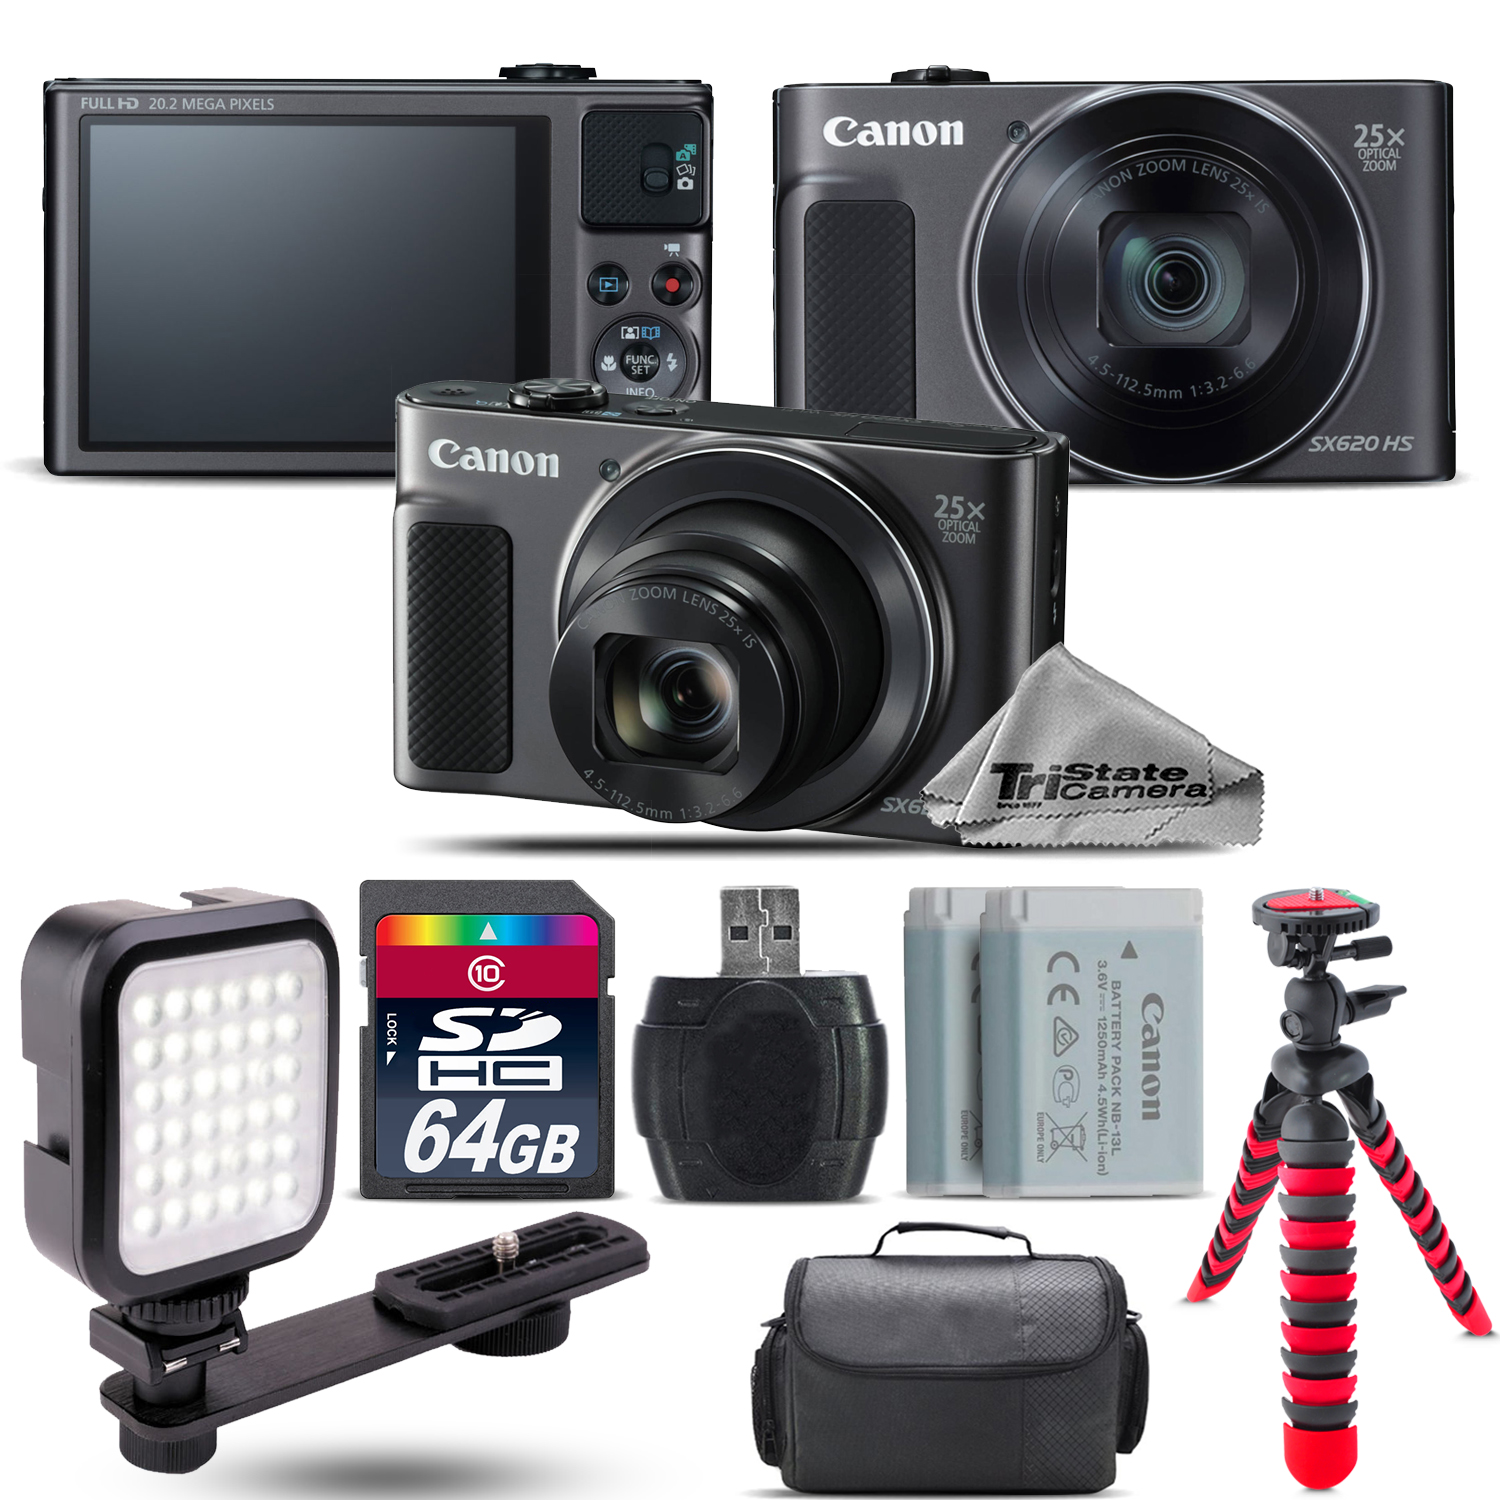 PowerShot SX620 HS Camera (Black) + Case + Spider Tripod + LED - 64GB Kit *FREE SHIPPING*